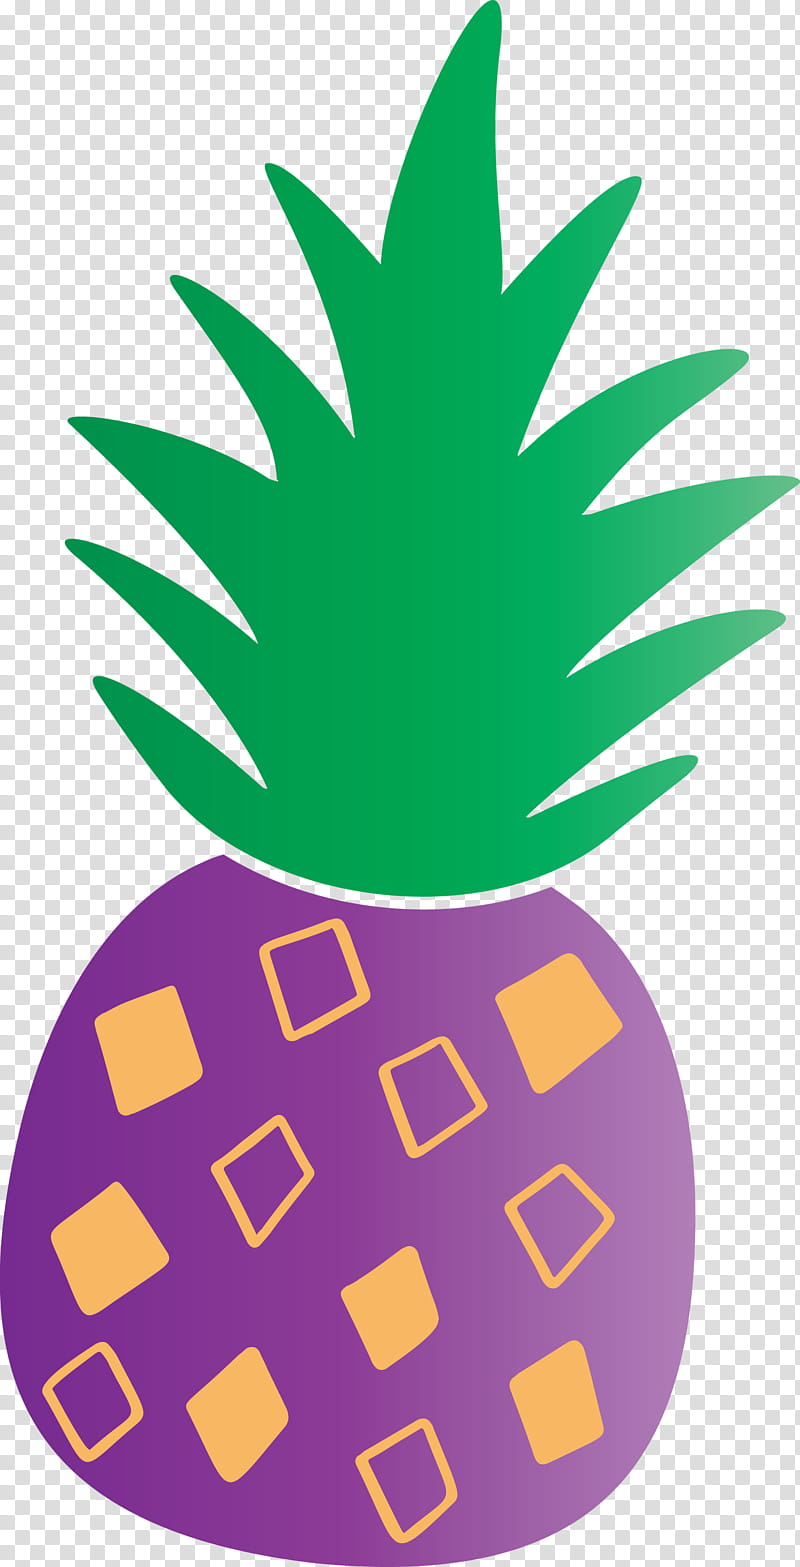 pineapple tropical summer, Summer
, Leaf, Green, Mtree, Flowerpot, Line, Meter transparent background PNG clipart